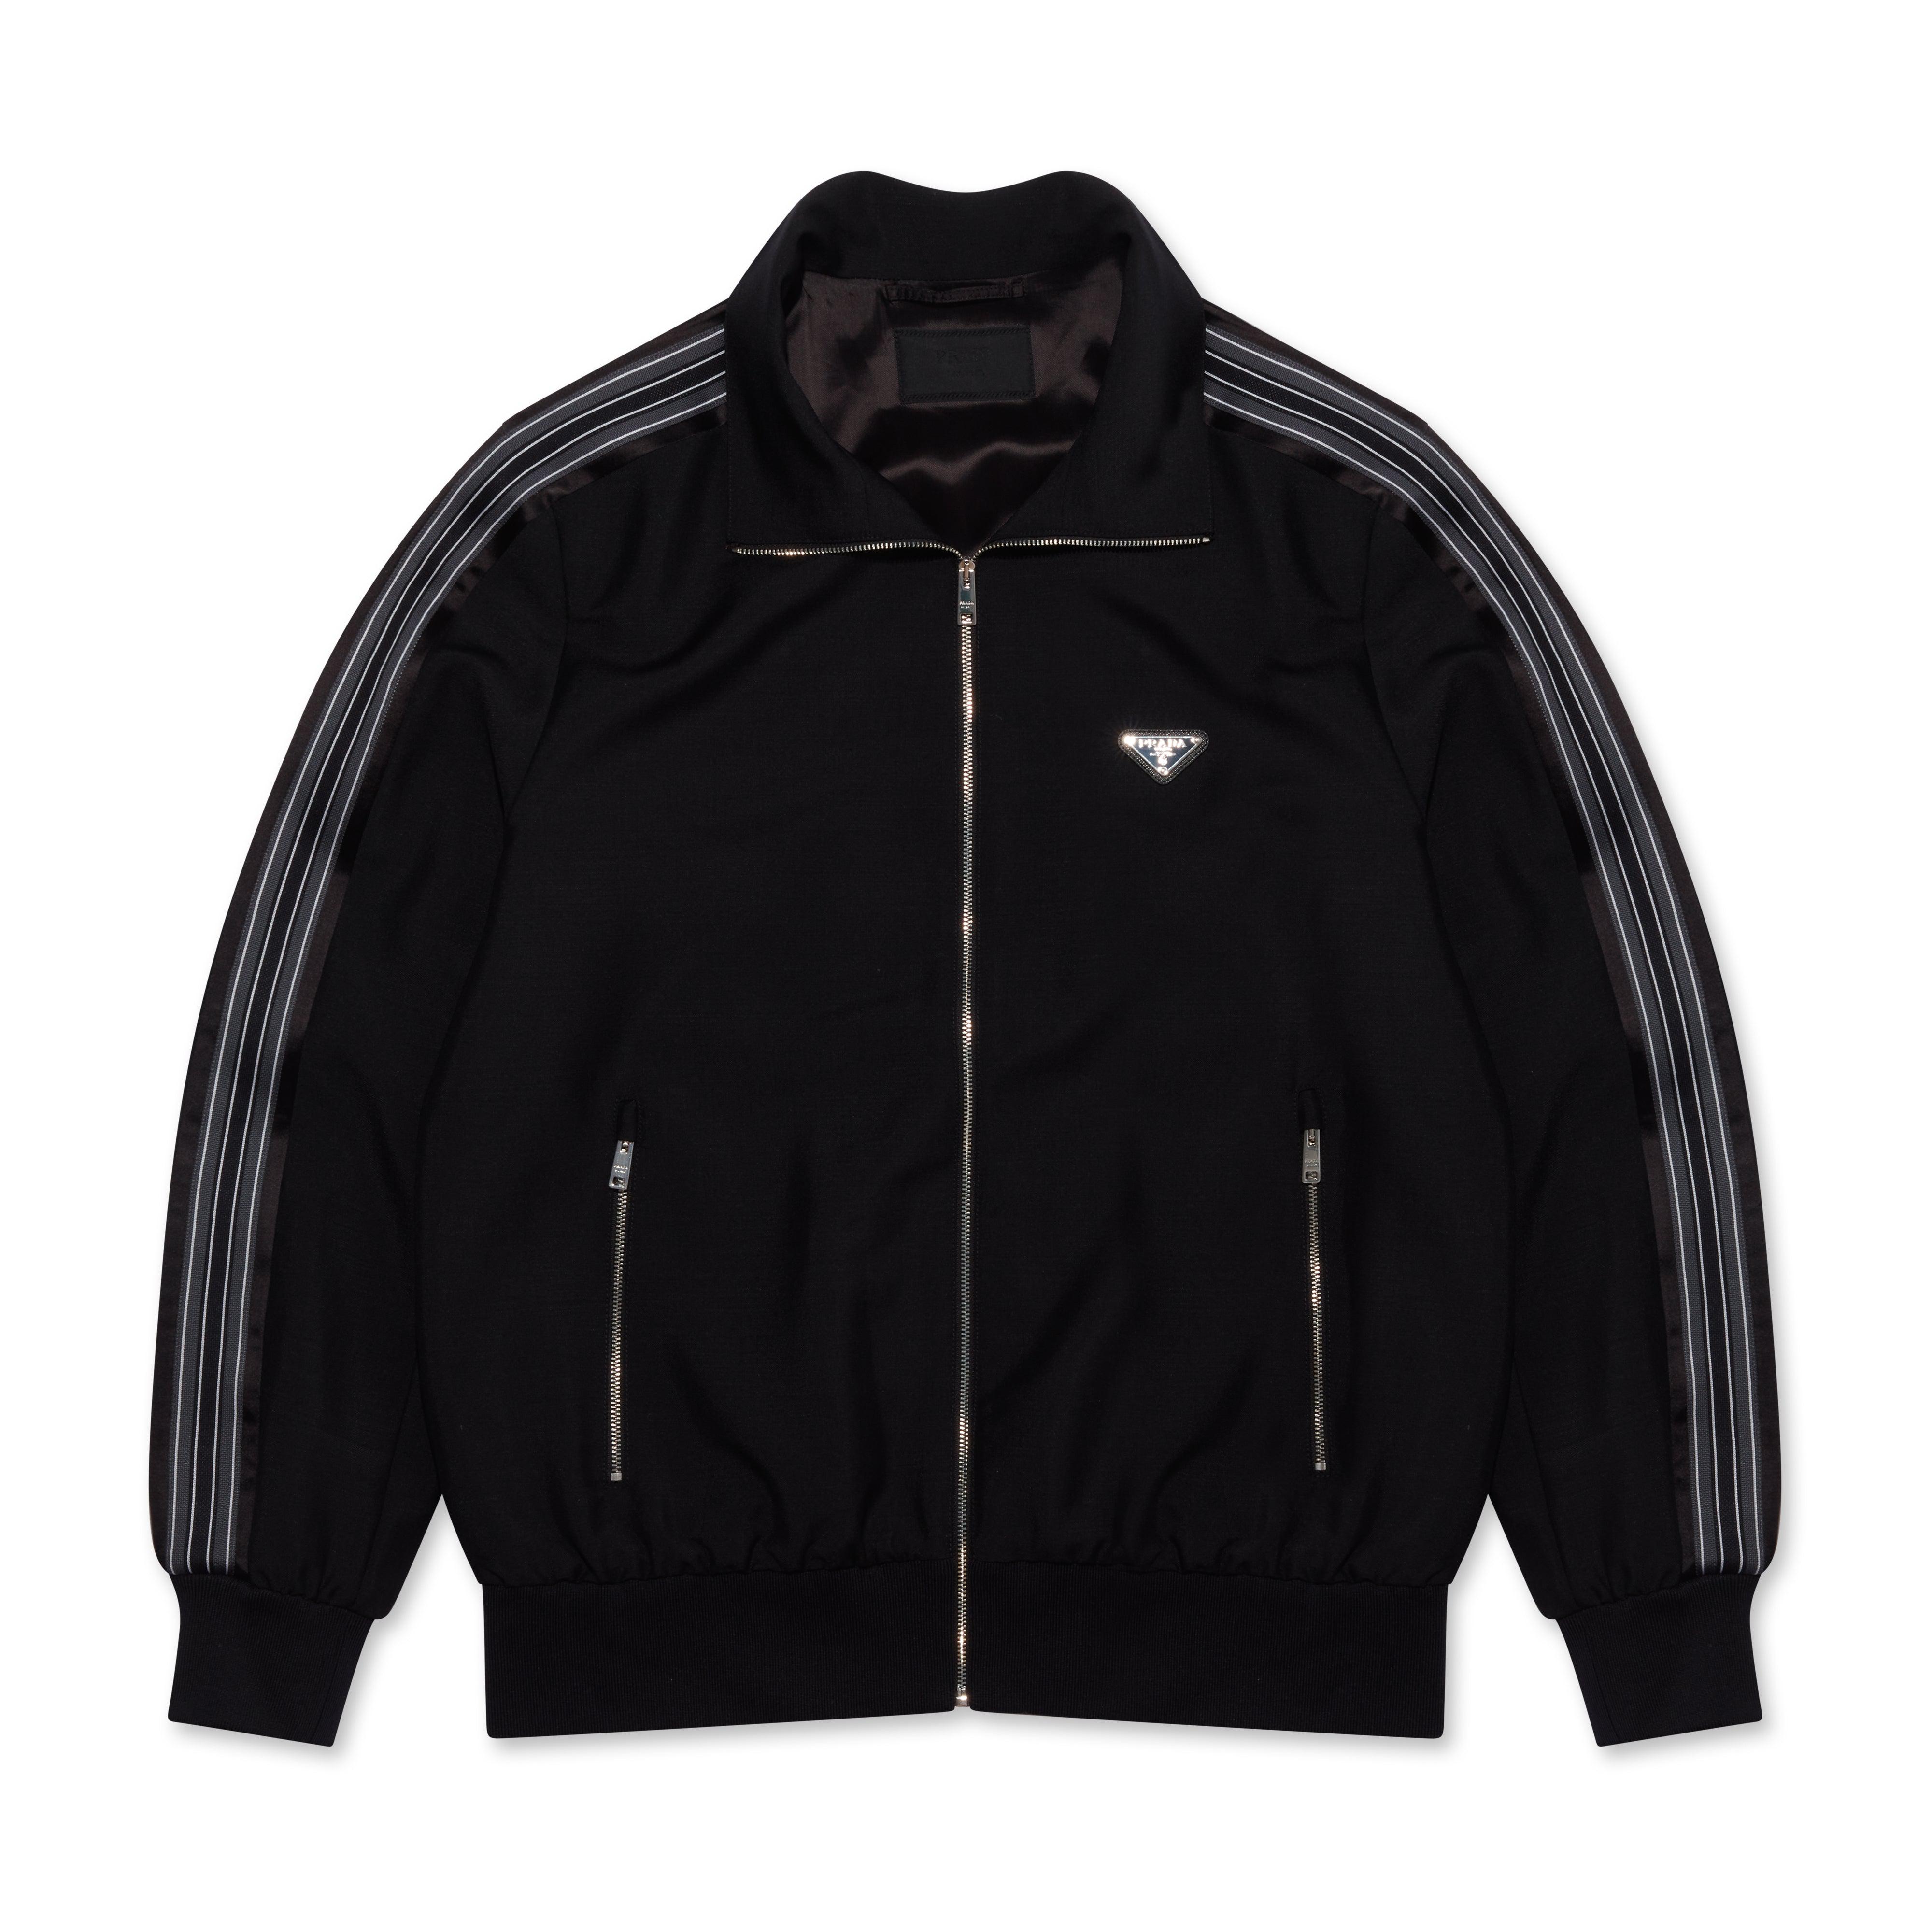 Prada Men's Zip Up Jacket (Black) by PRADA